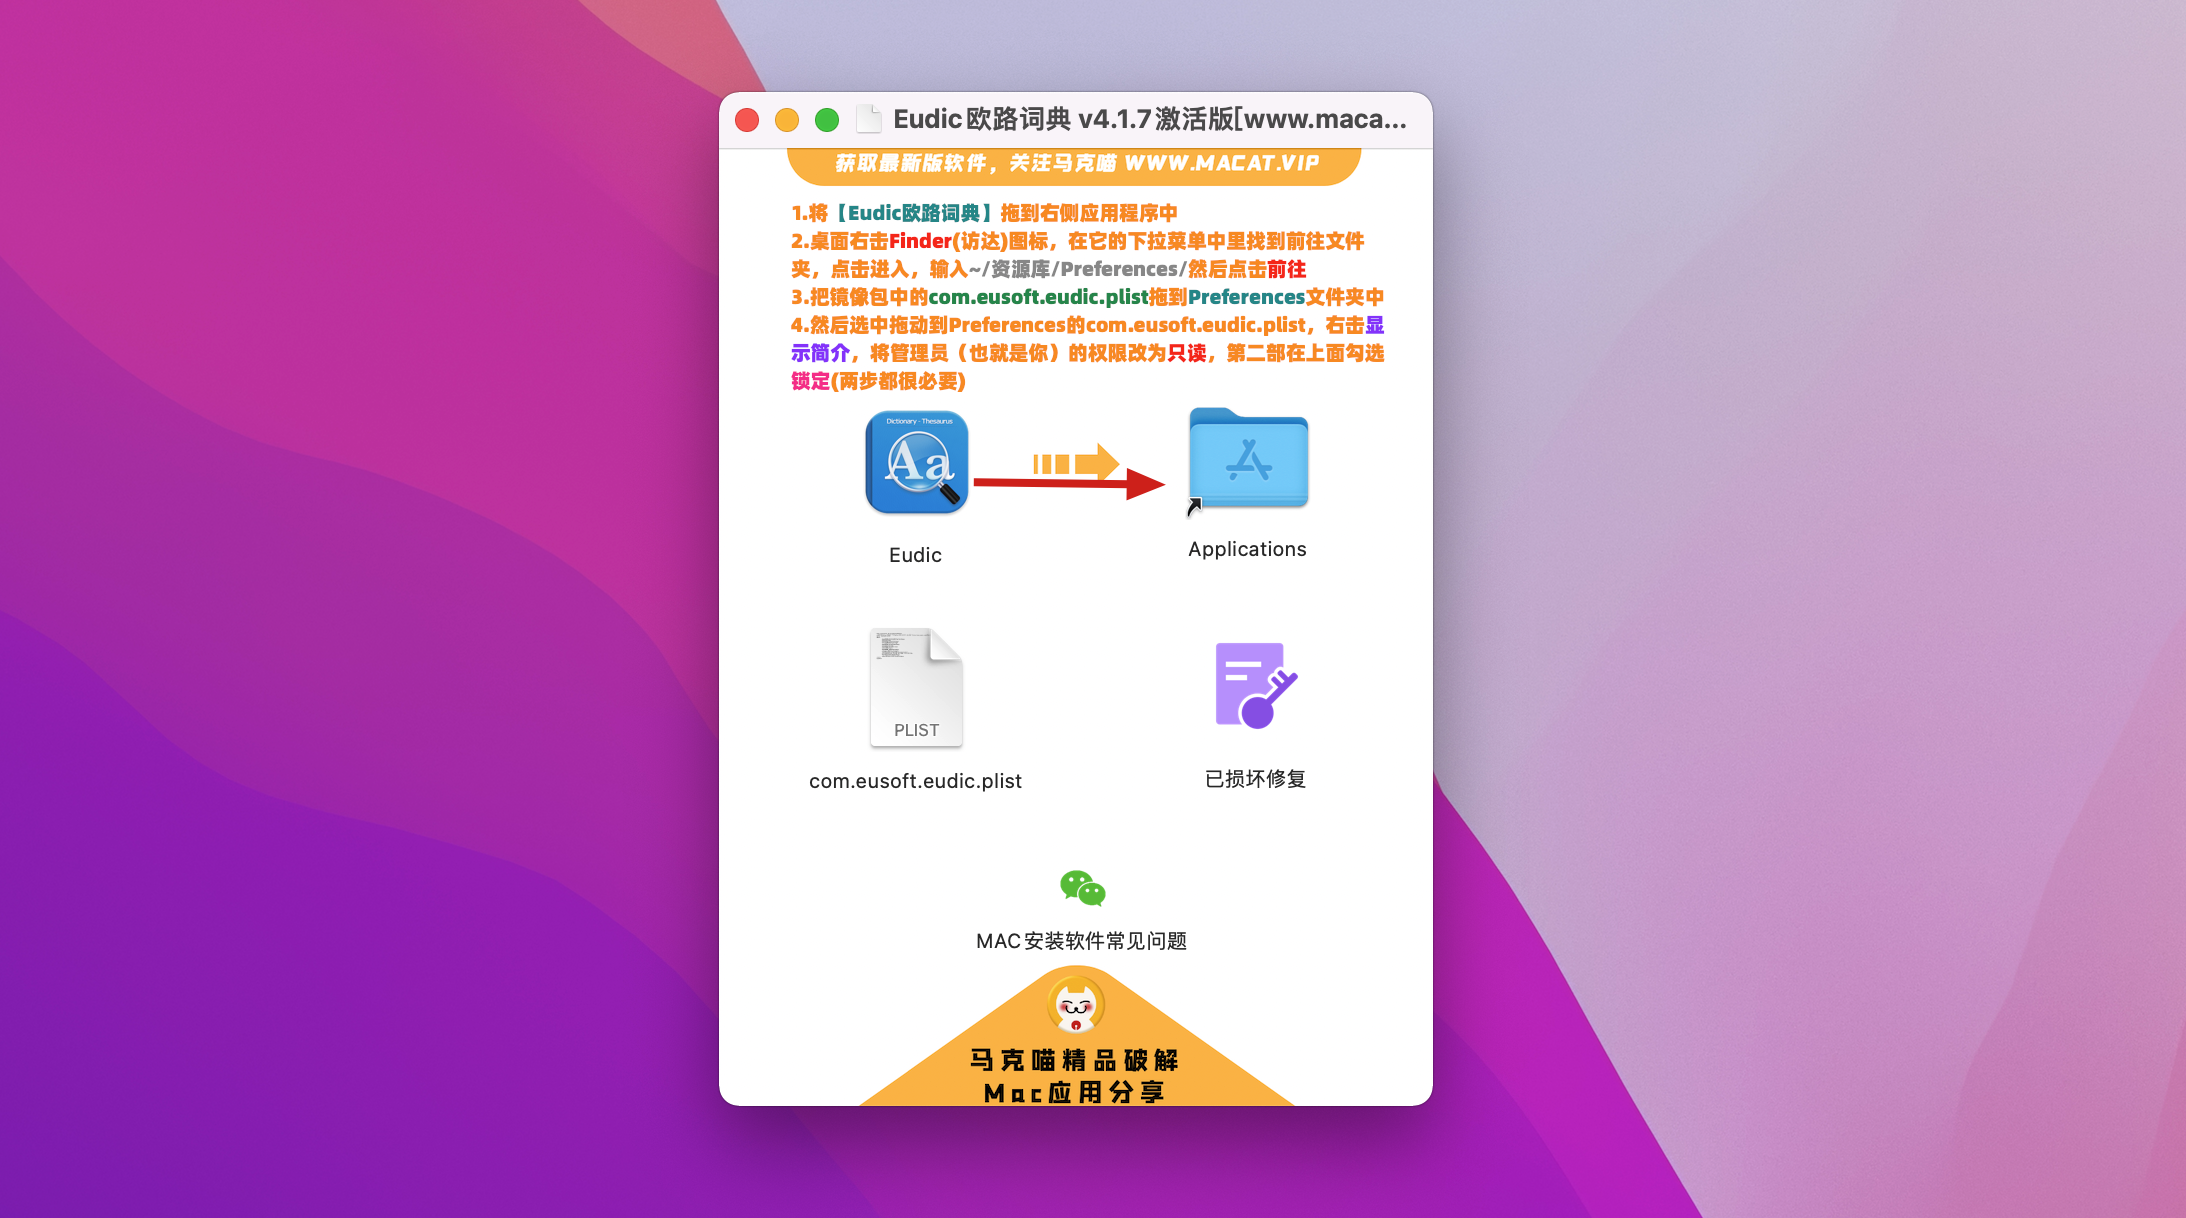 Eudic欧路词典 增强版 for Mac v4.2.9(1081) 中文激活版 英语词典翻译查询工具